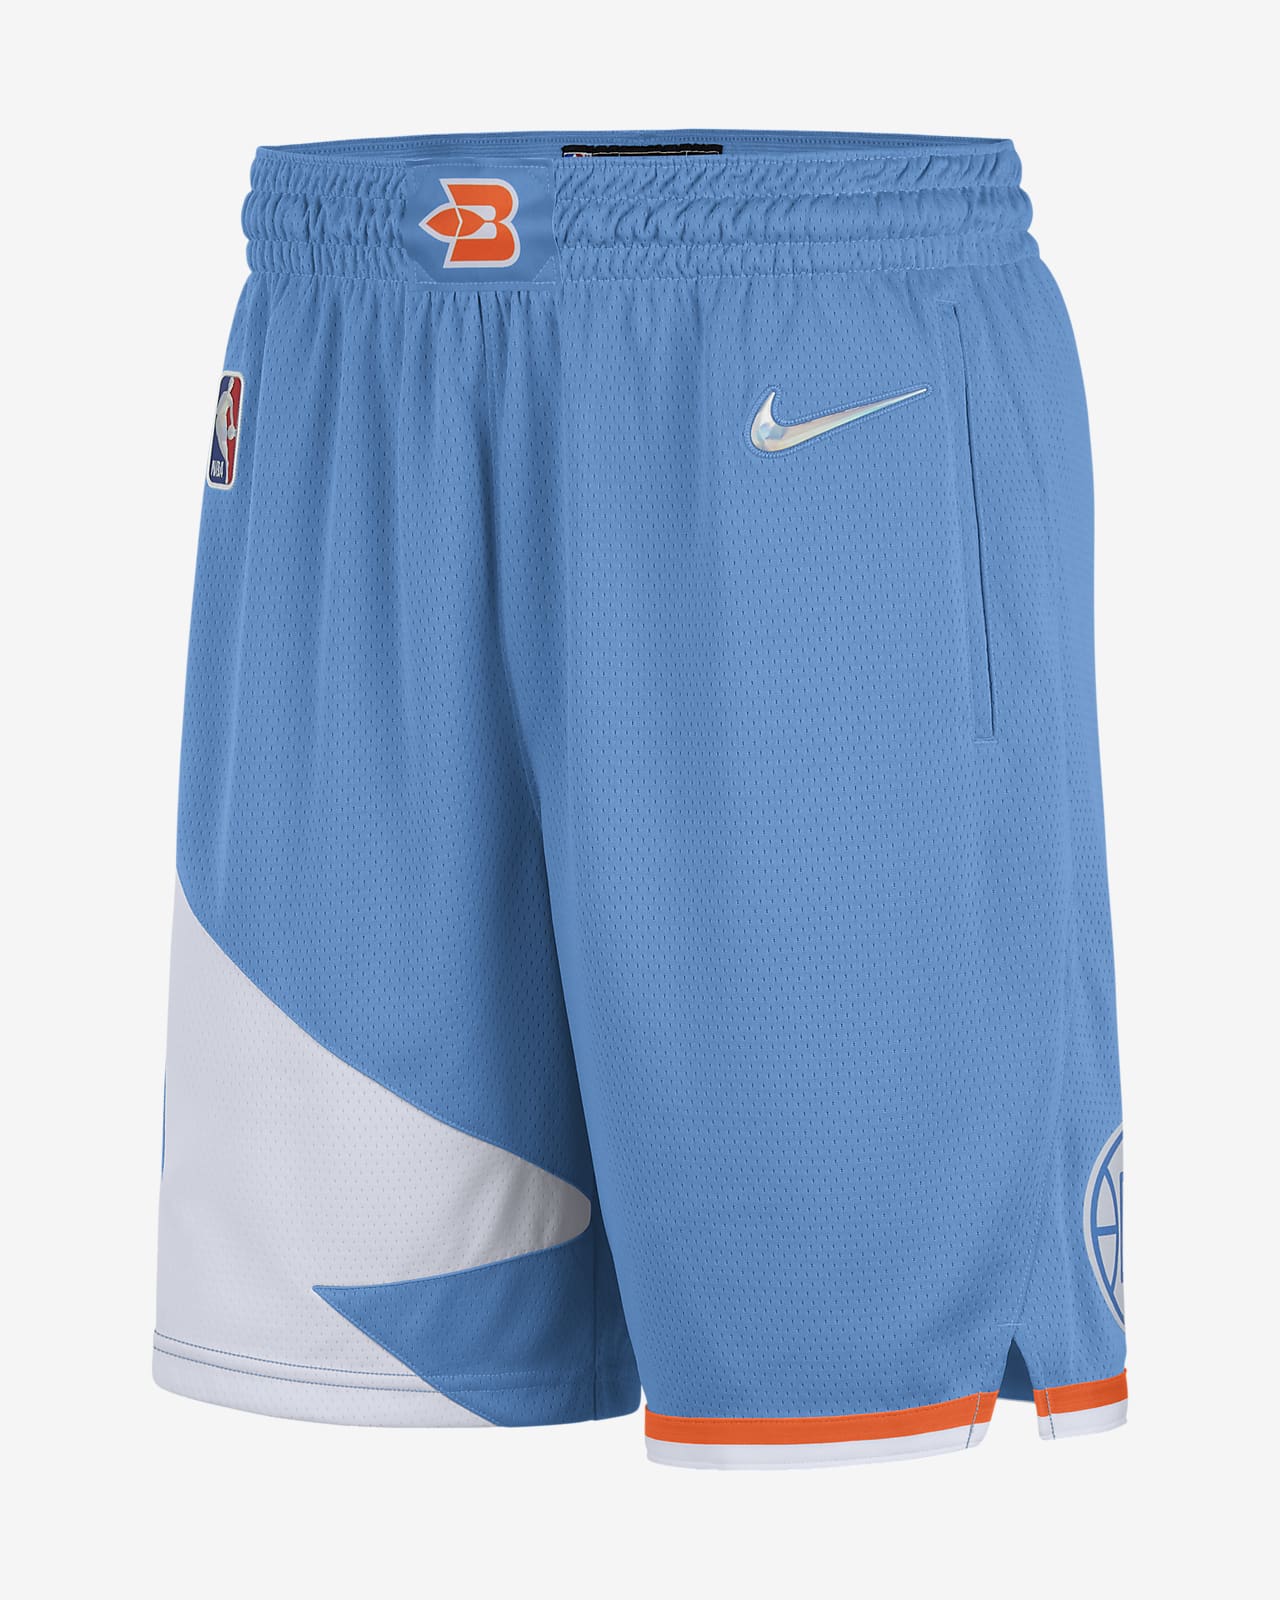 Shorts LA Clippers City Edition Nike Dri-FIT NBA Swingman för män